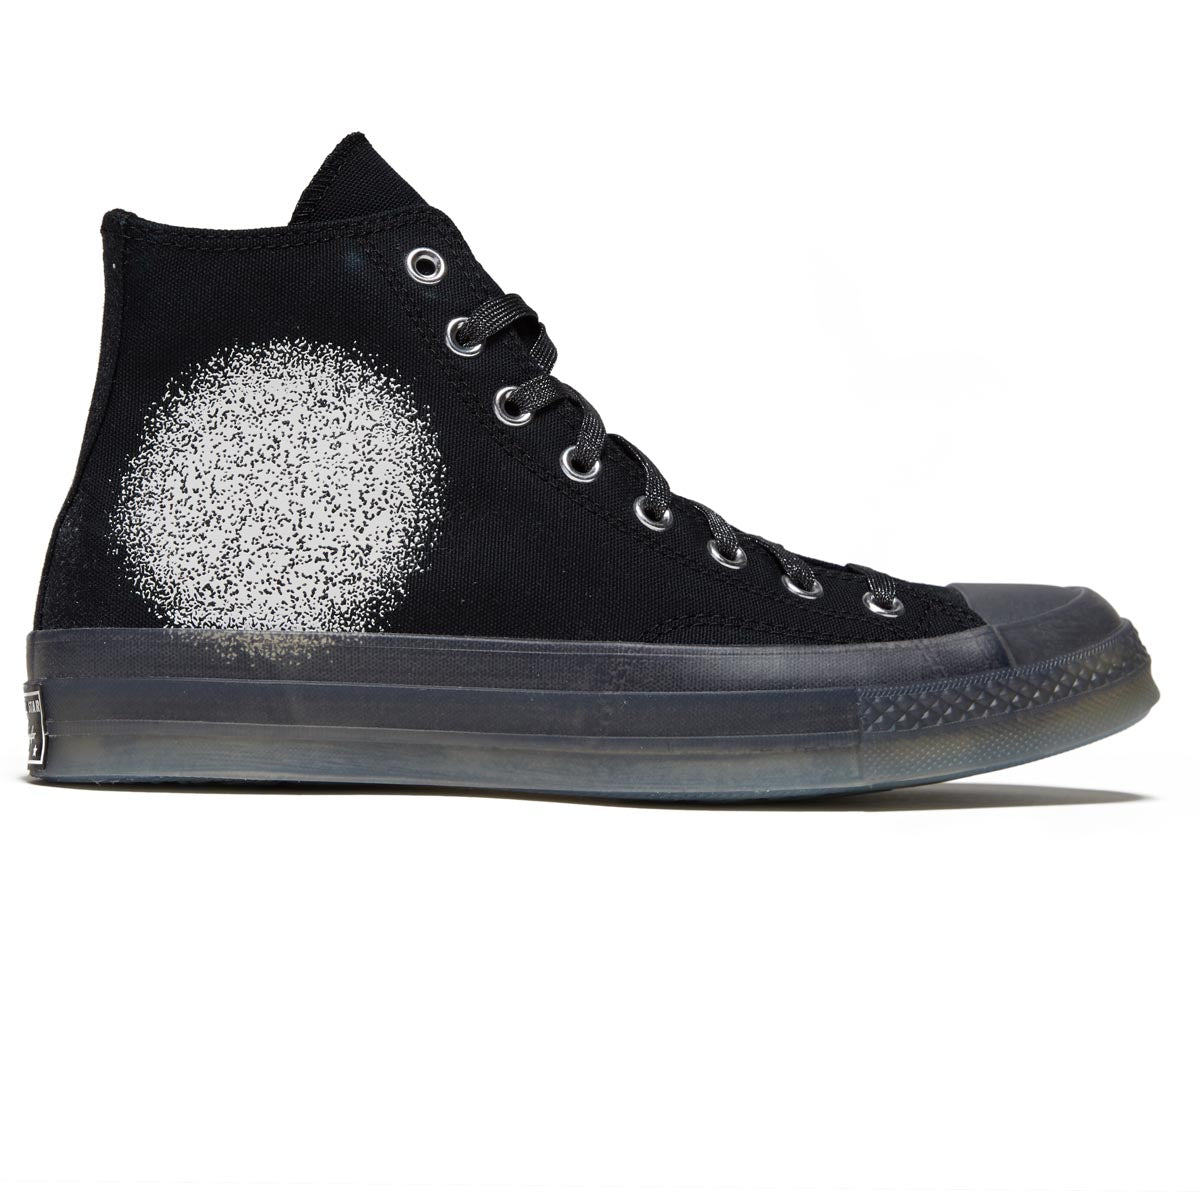 Converse x Turnstile Chuck 70 Hi Shoes - Black/Grey/White image 1